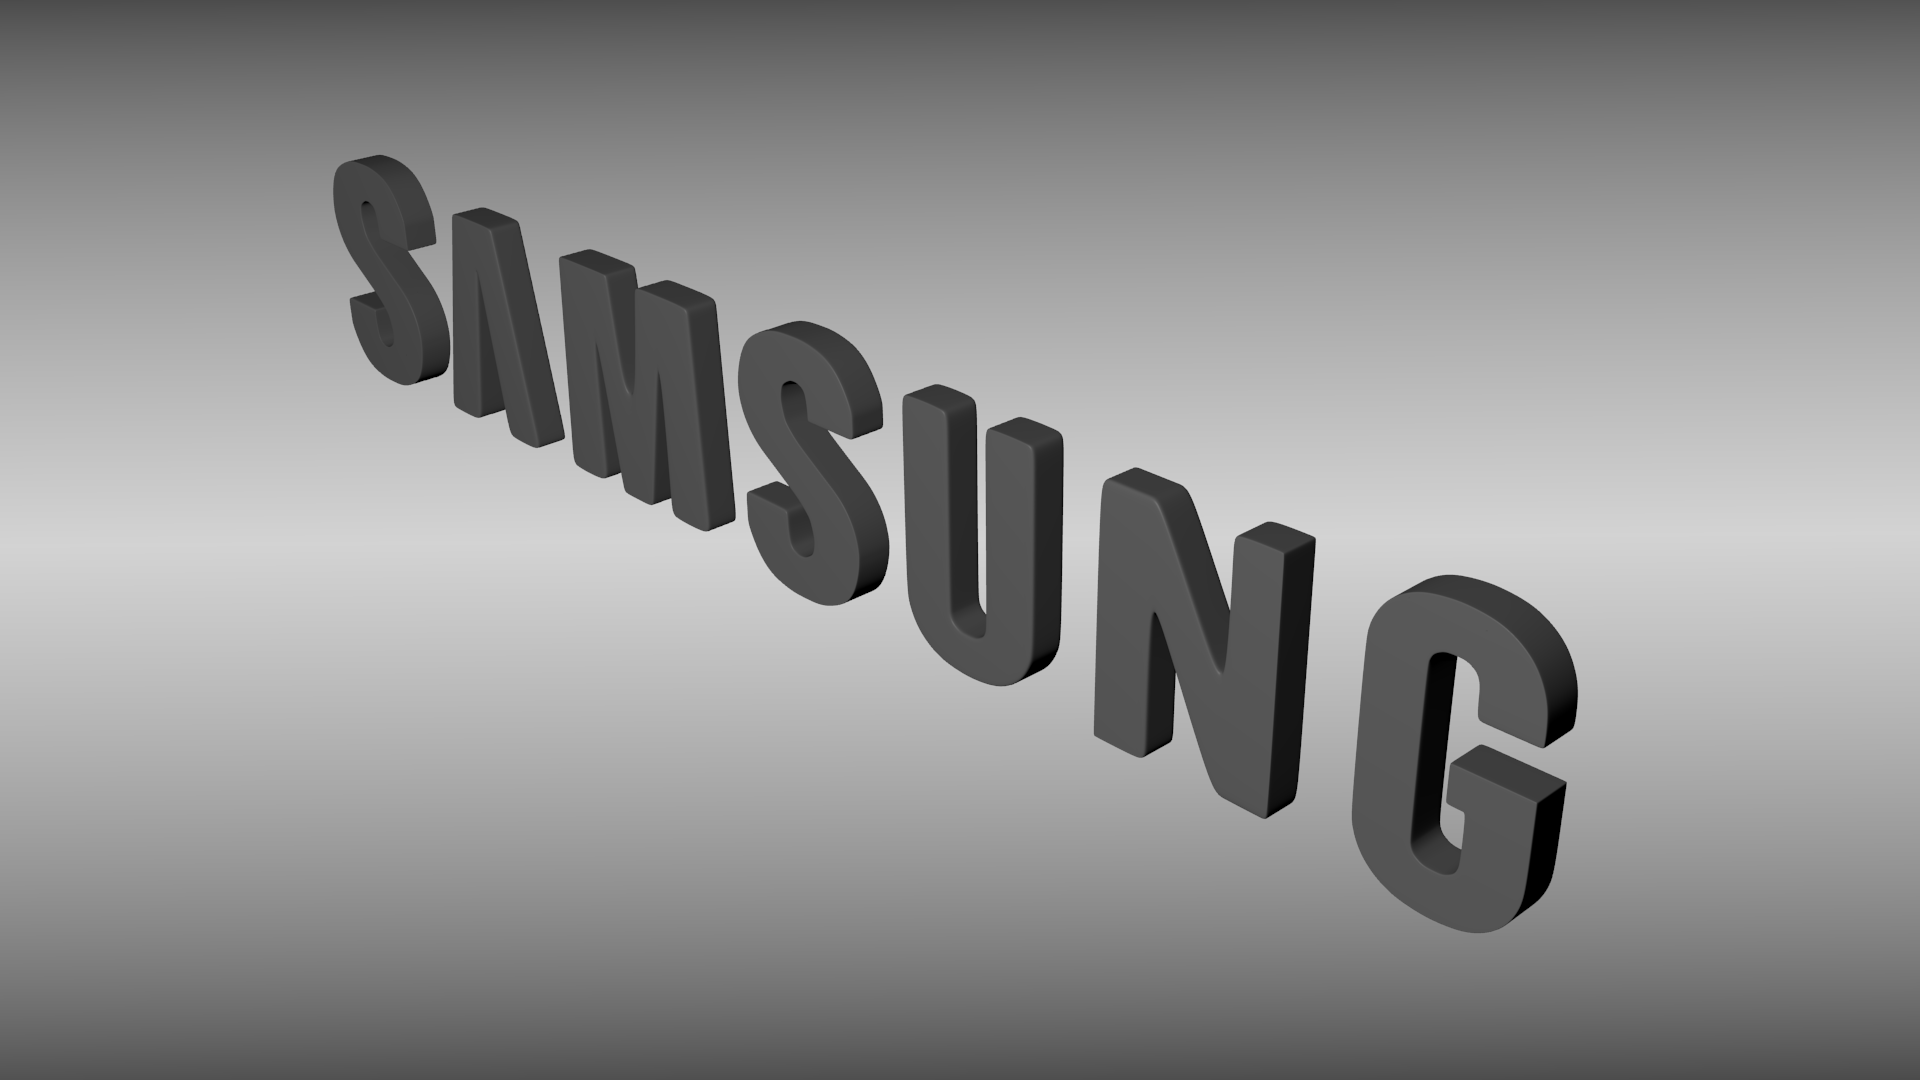 Samsung Galaxy S7 & S7 EDGE Win ‘Best Smartphone Camera Award’ In Europe.